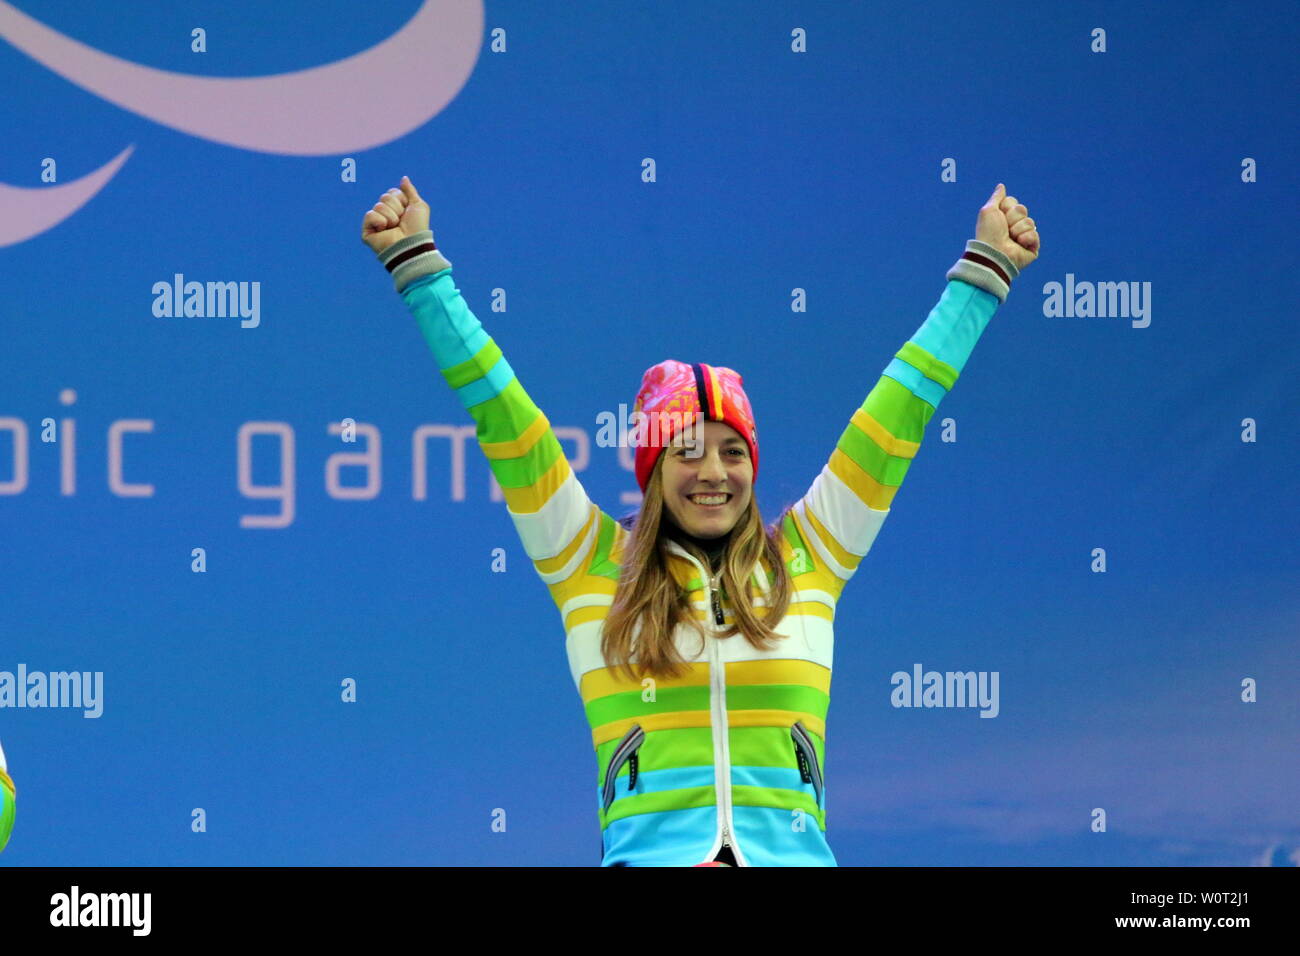 Anna Schaffelhuber bei der Siegerehrung Rosa Khutor Ski Alpin 6. Jeux paralympiques Jeux paralympiques Tag Sotschi Sotschi 2014 / 2014 Jeux paralympiques d'hiver de Sotchi Banque D'Images